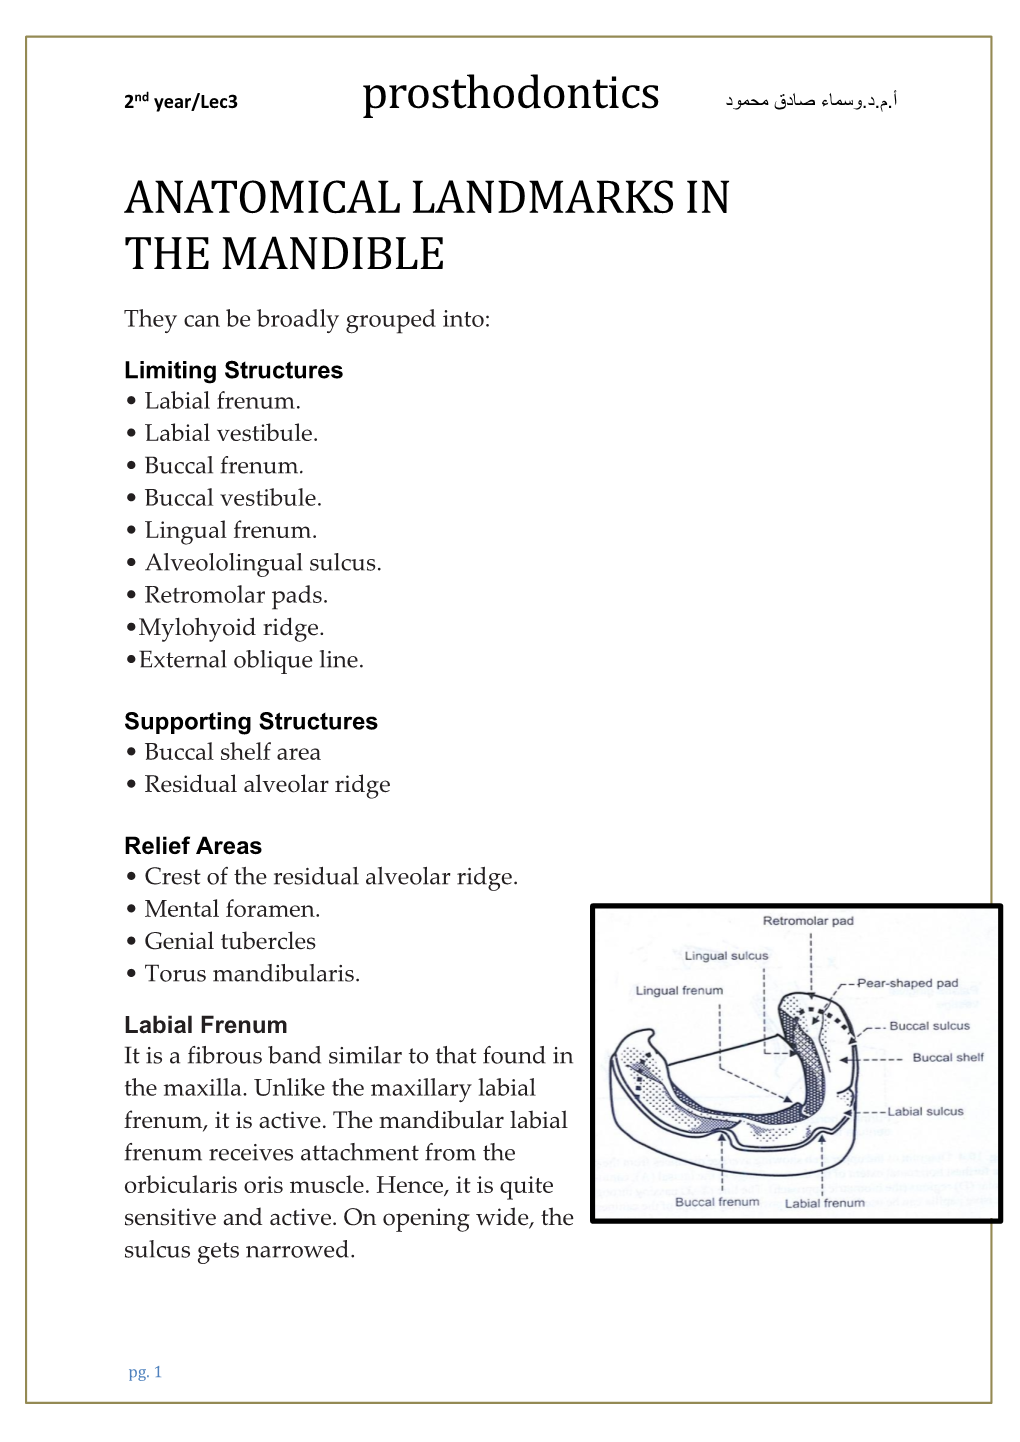 Anatomical Landmarks in the Mandible